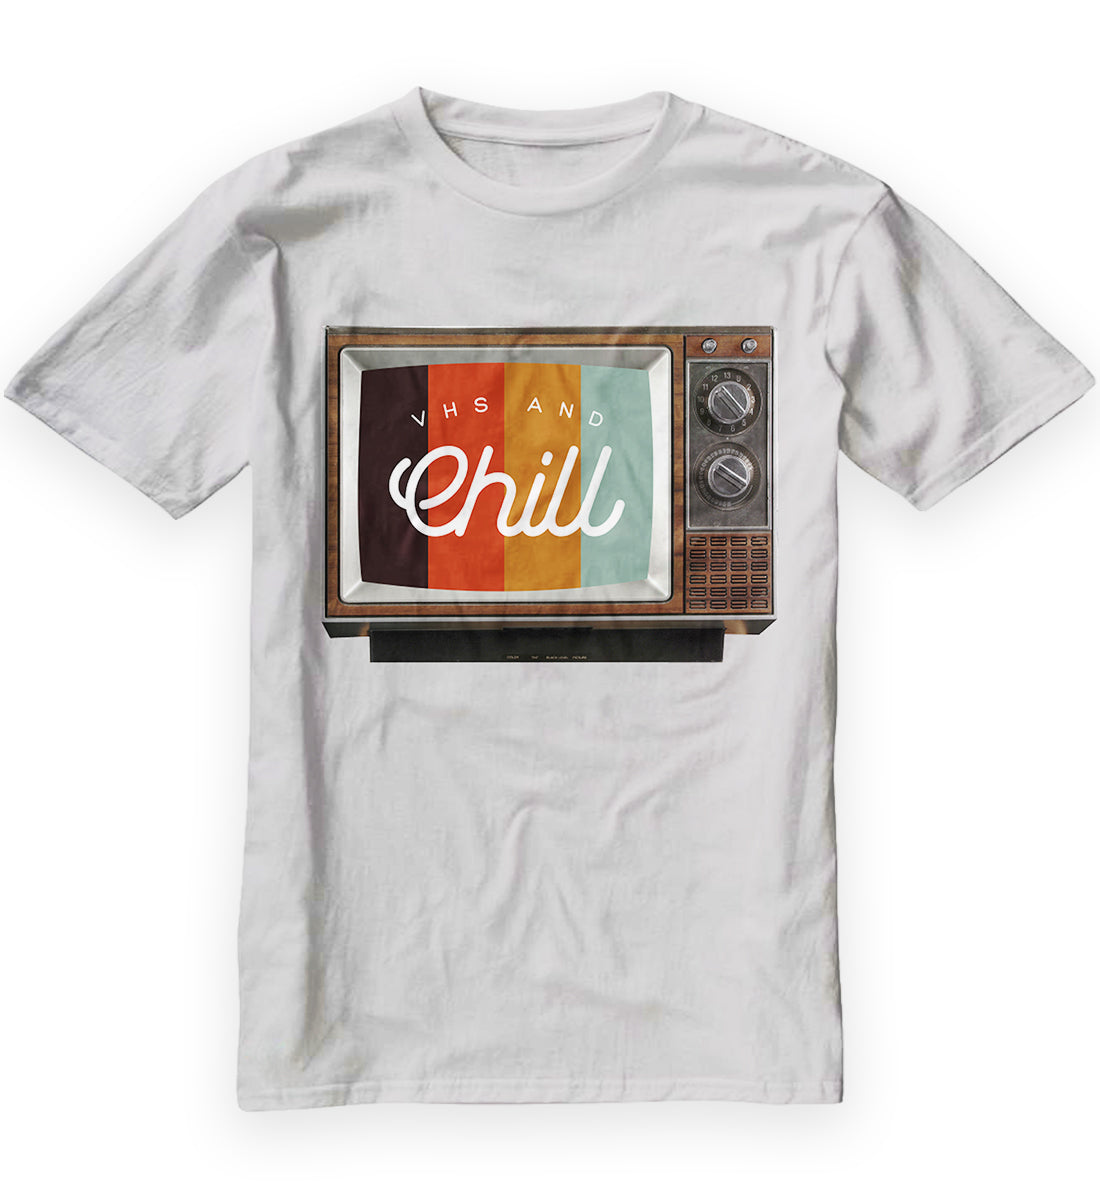 VHS & Chill Kids T-Shirt